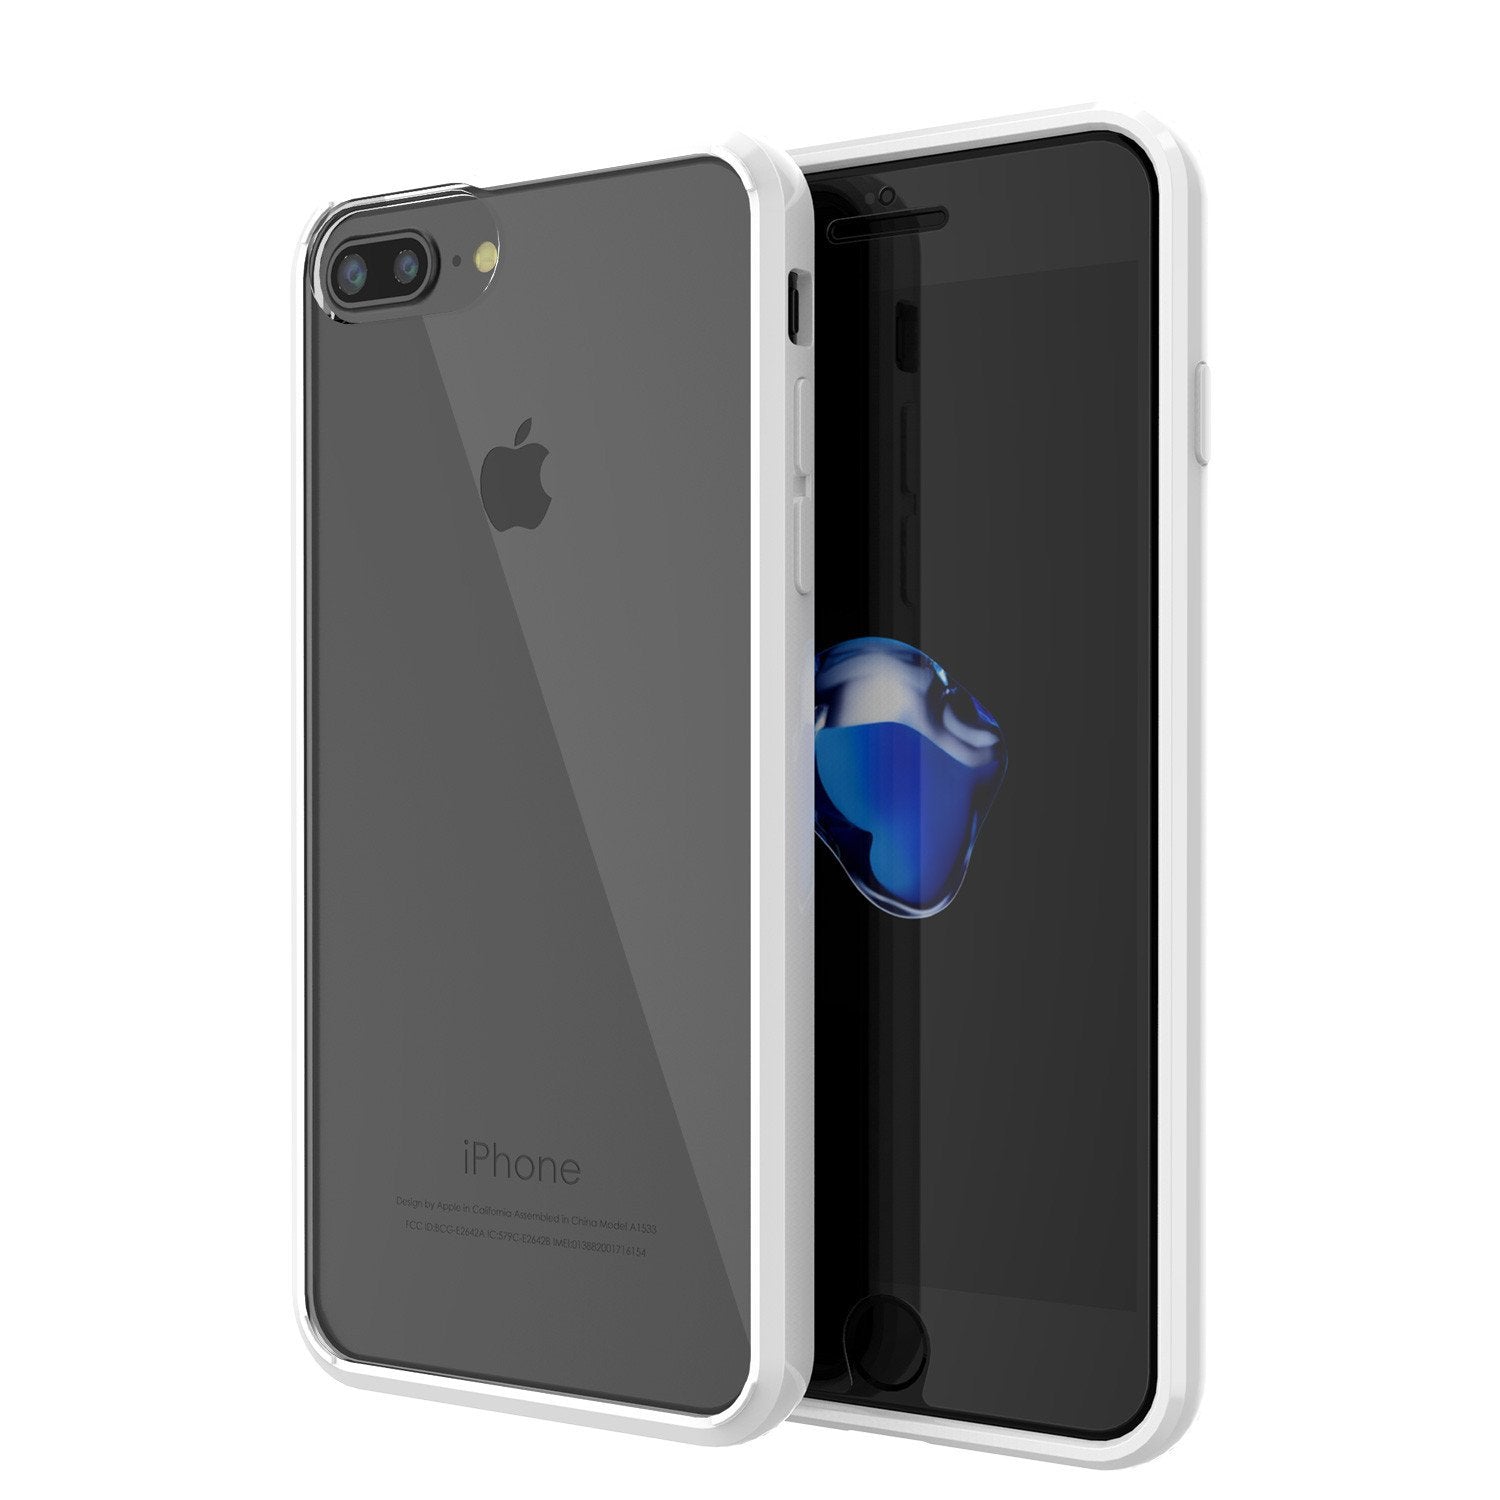 iPhone 7 Case Punkcase® LUCID 2.0 White Series for Apple iPhone 7 Slim | Slick Frame Lifetime Warranty Exchange